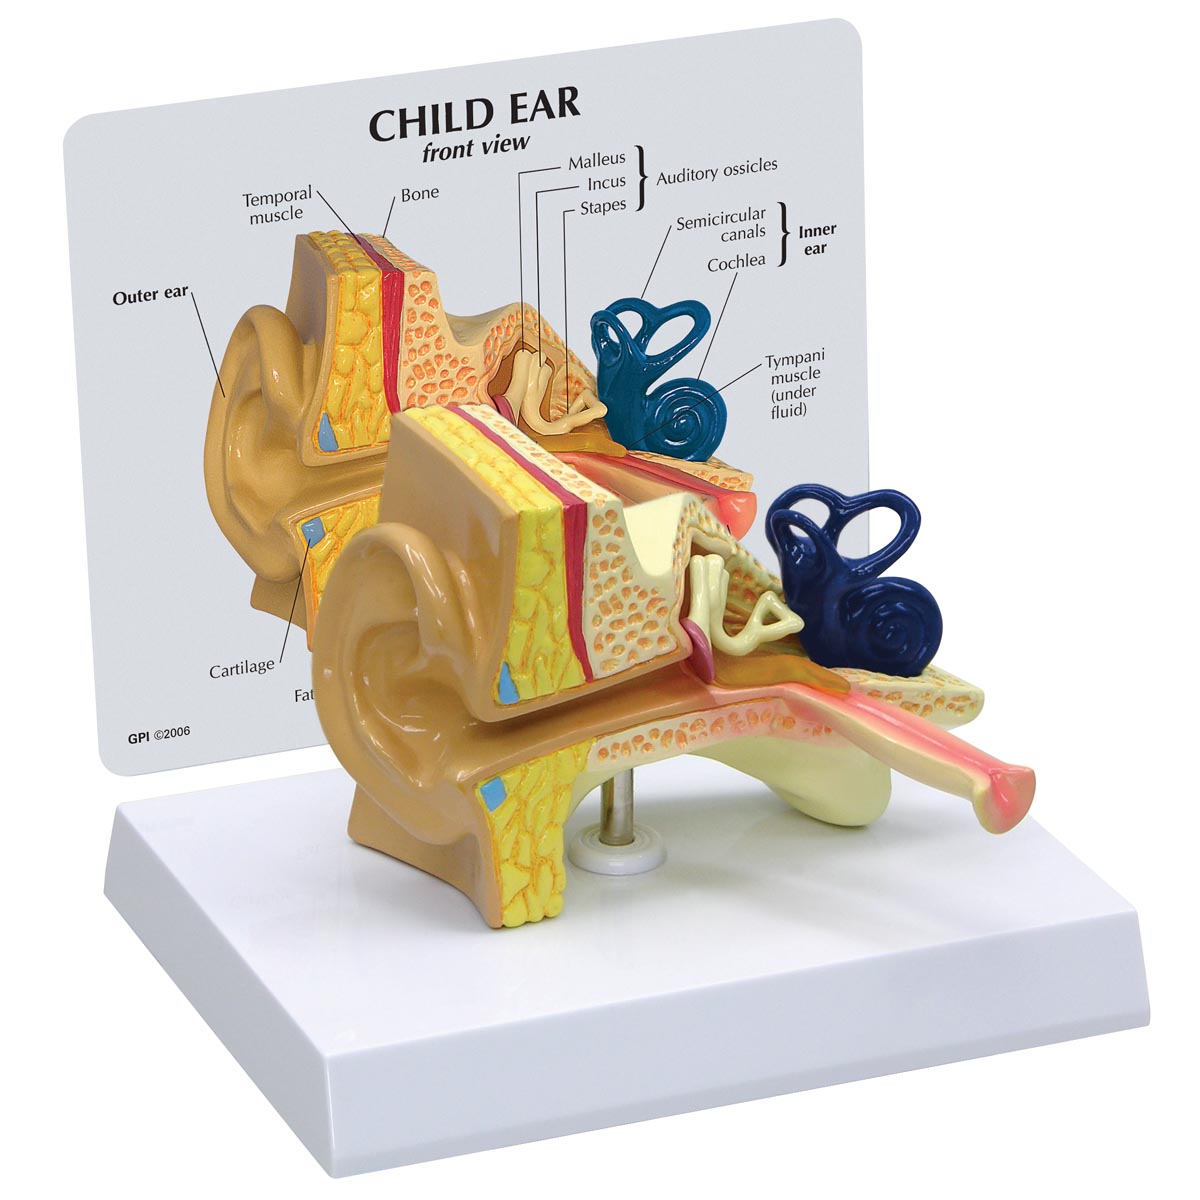 Modell eines Kinderohrs, Bestellnummer 1019528, E25, 2300, GPI Anatomicals